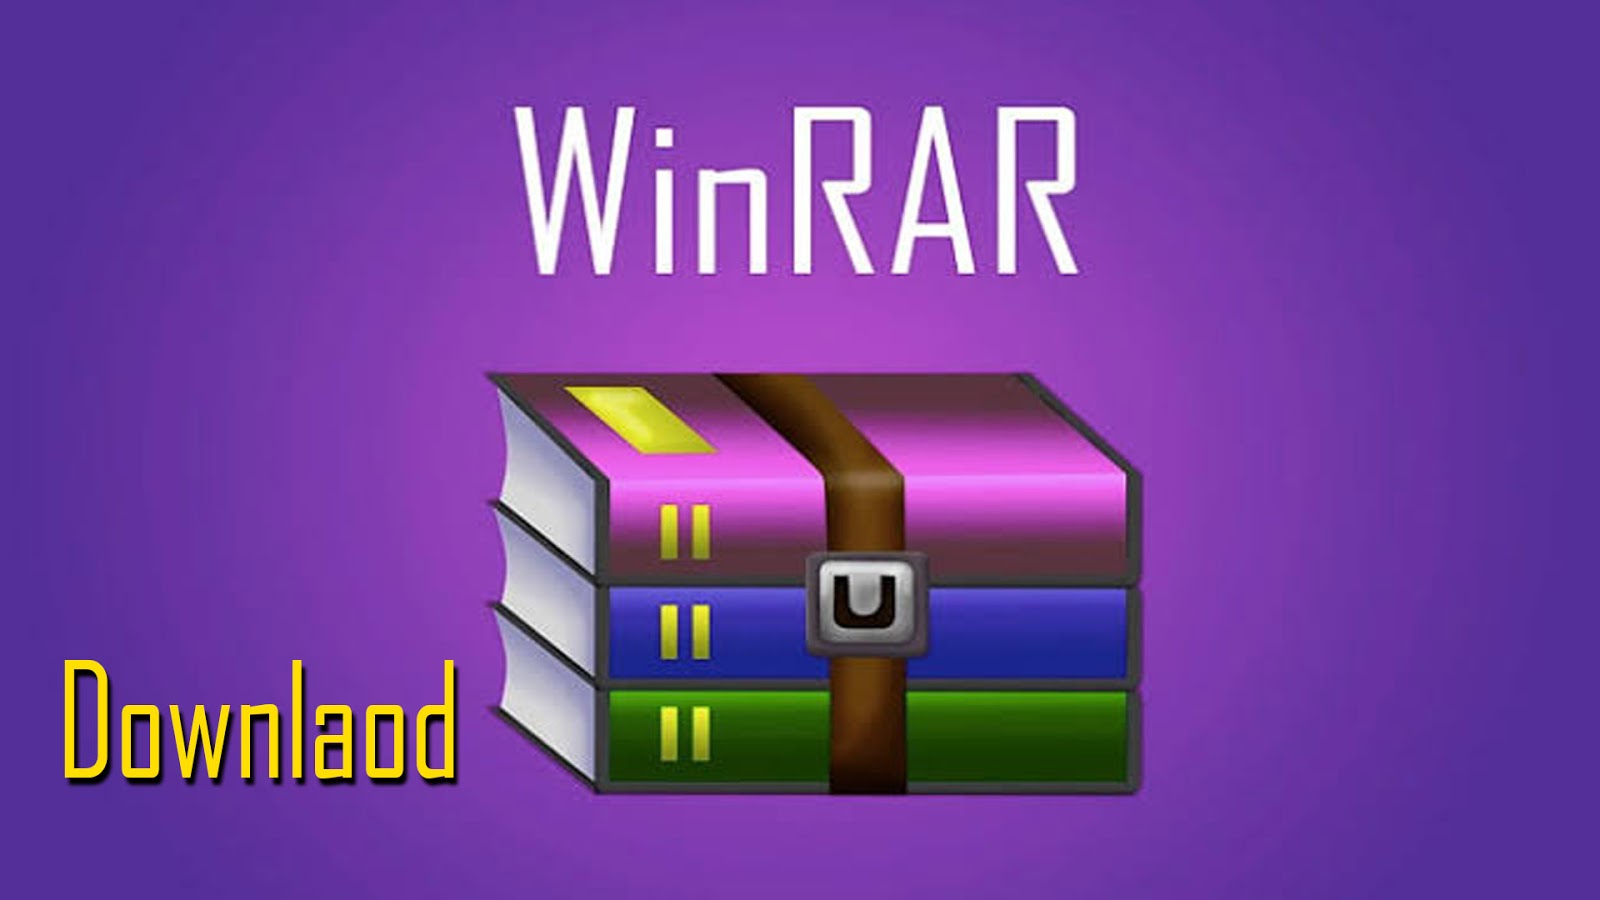 winrar 64 bit free download for windows 7 home basic